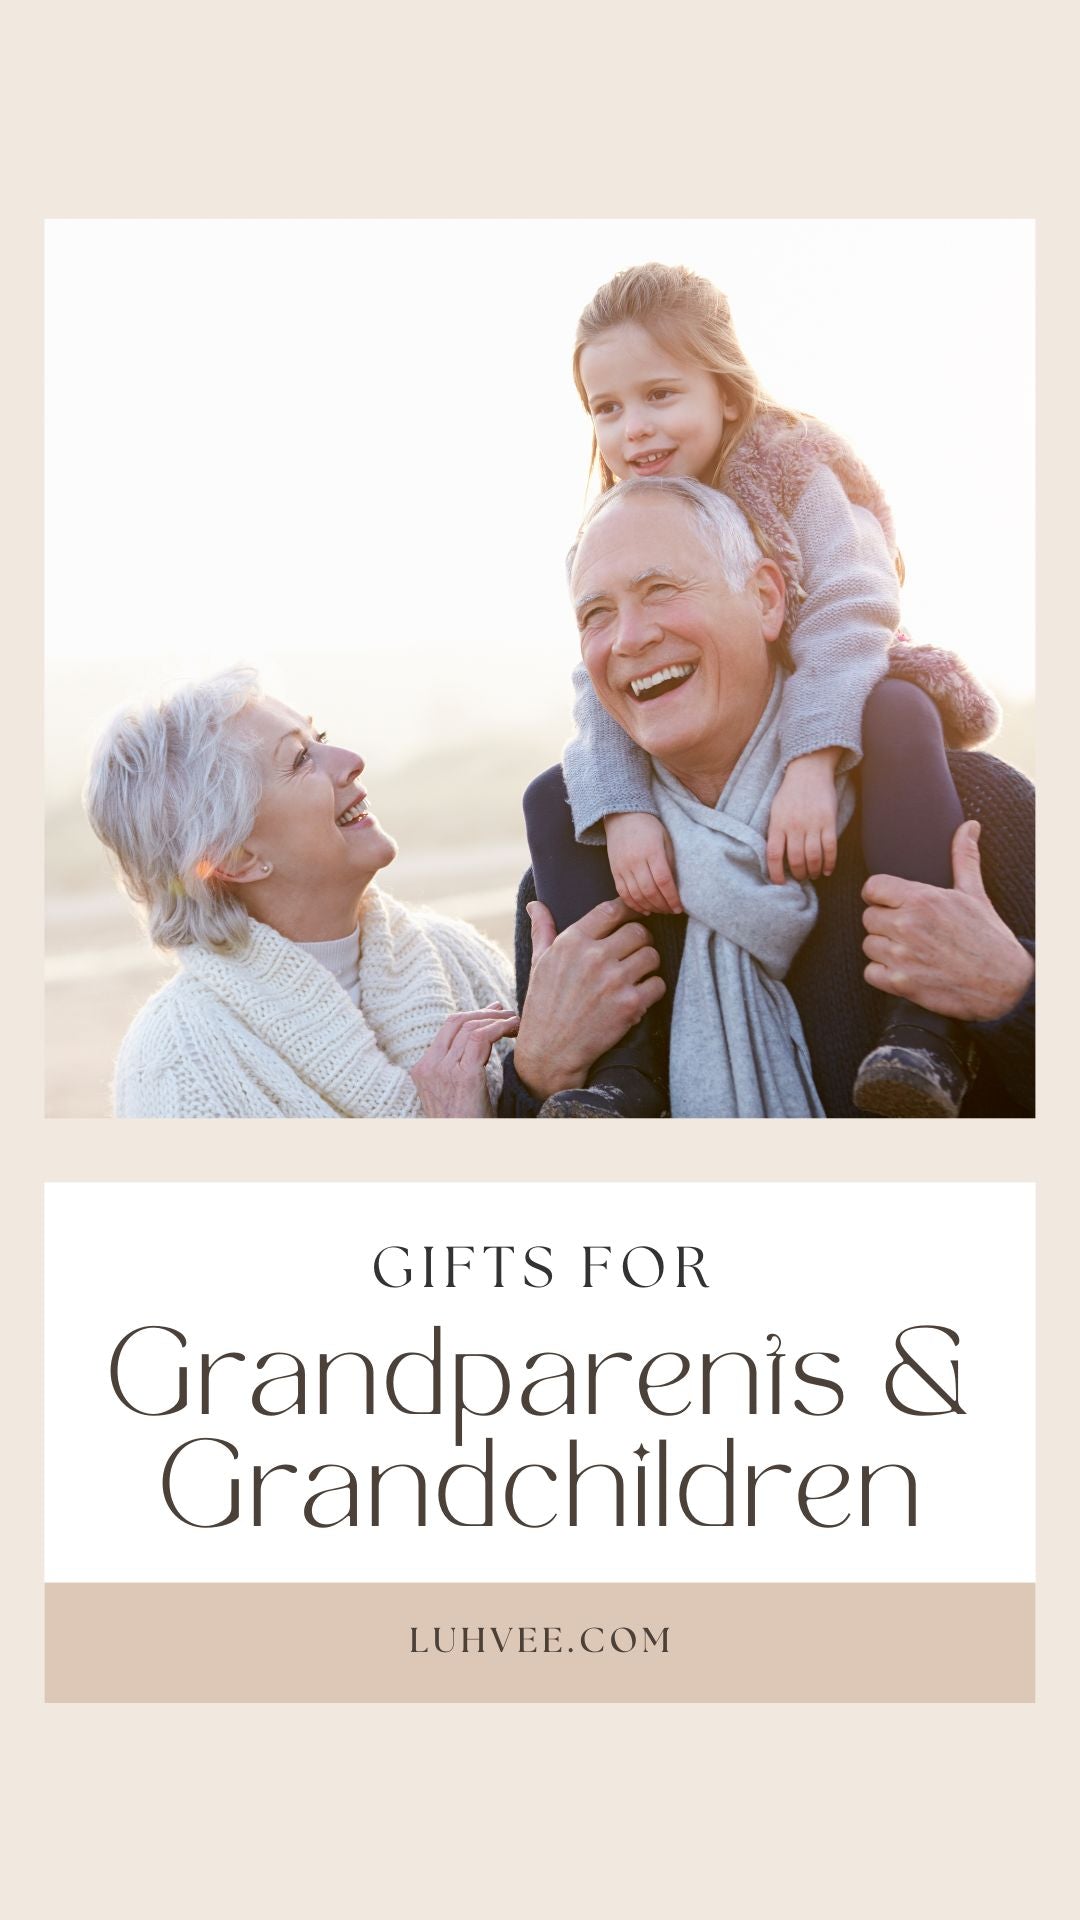 Gifts For Grandparents & Grandchildren